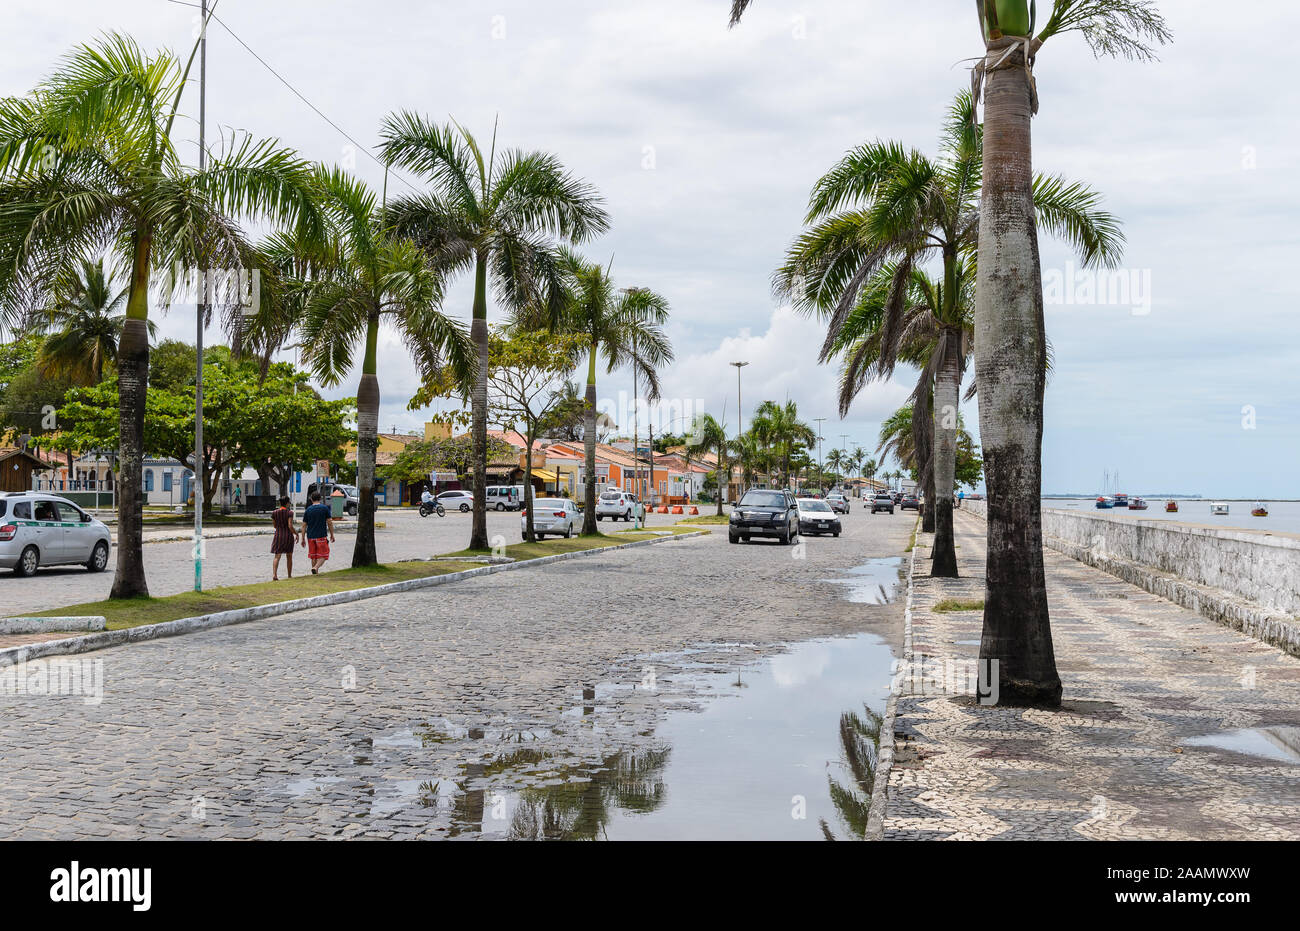 Palm trees line the street of port city Porto Seguro, Bahia, Brazil, South America. Stock Photo